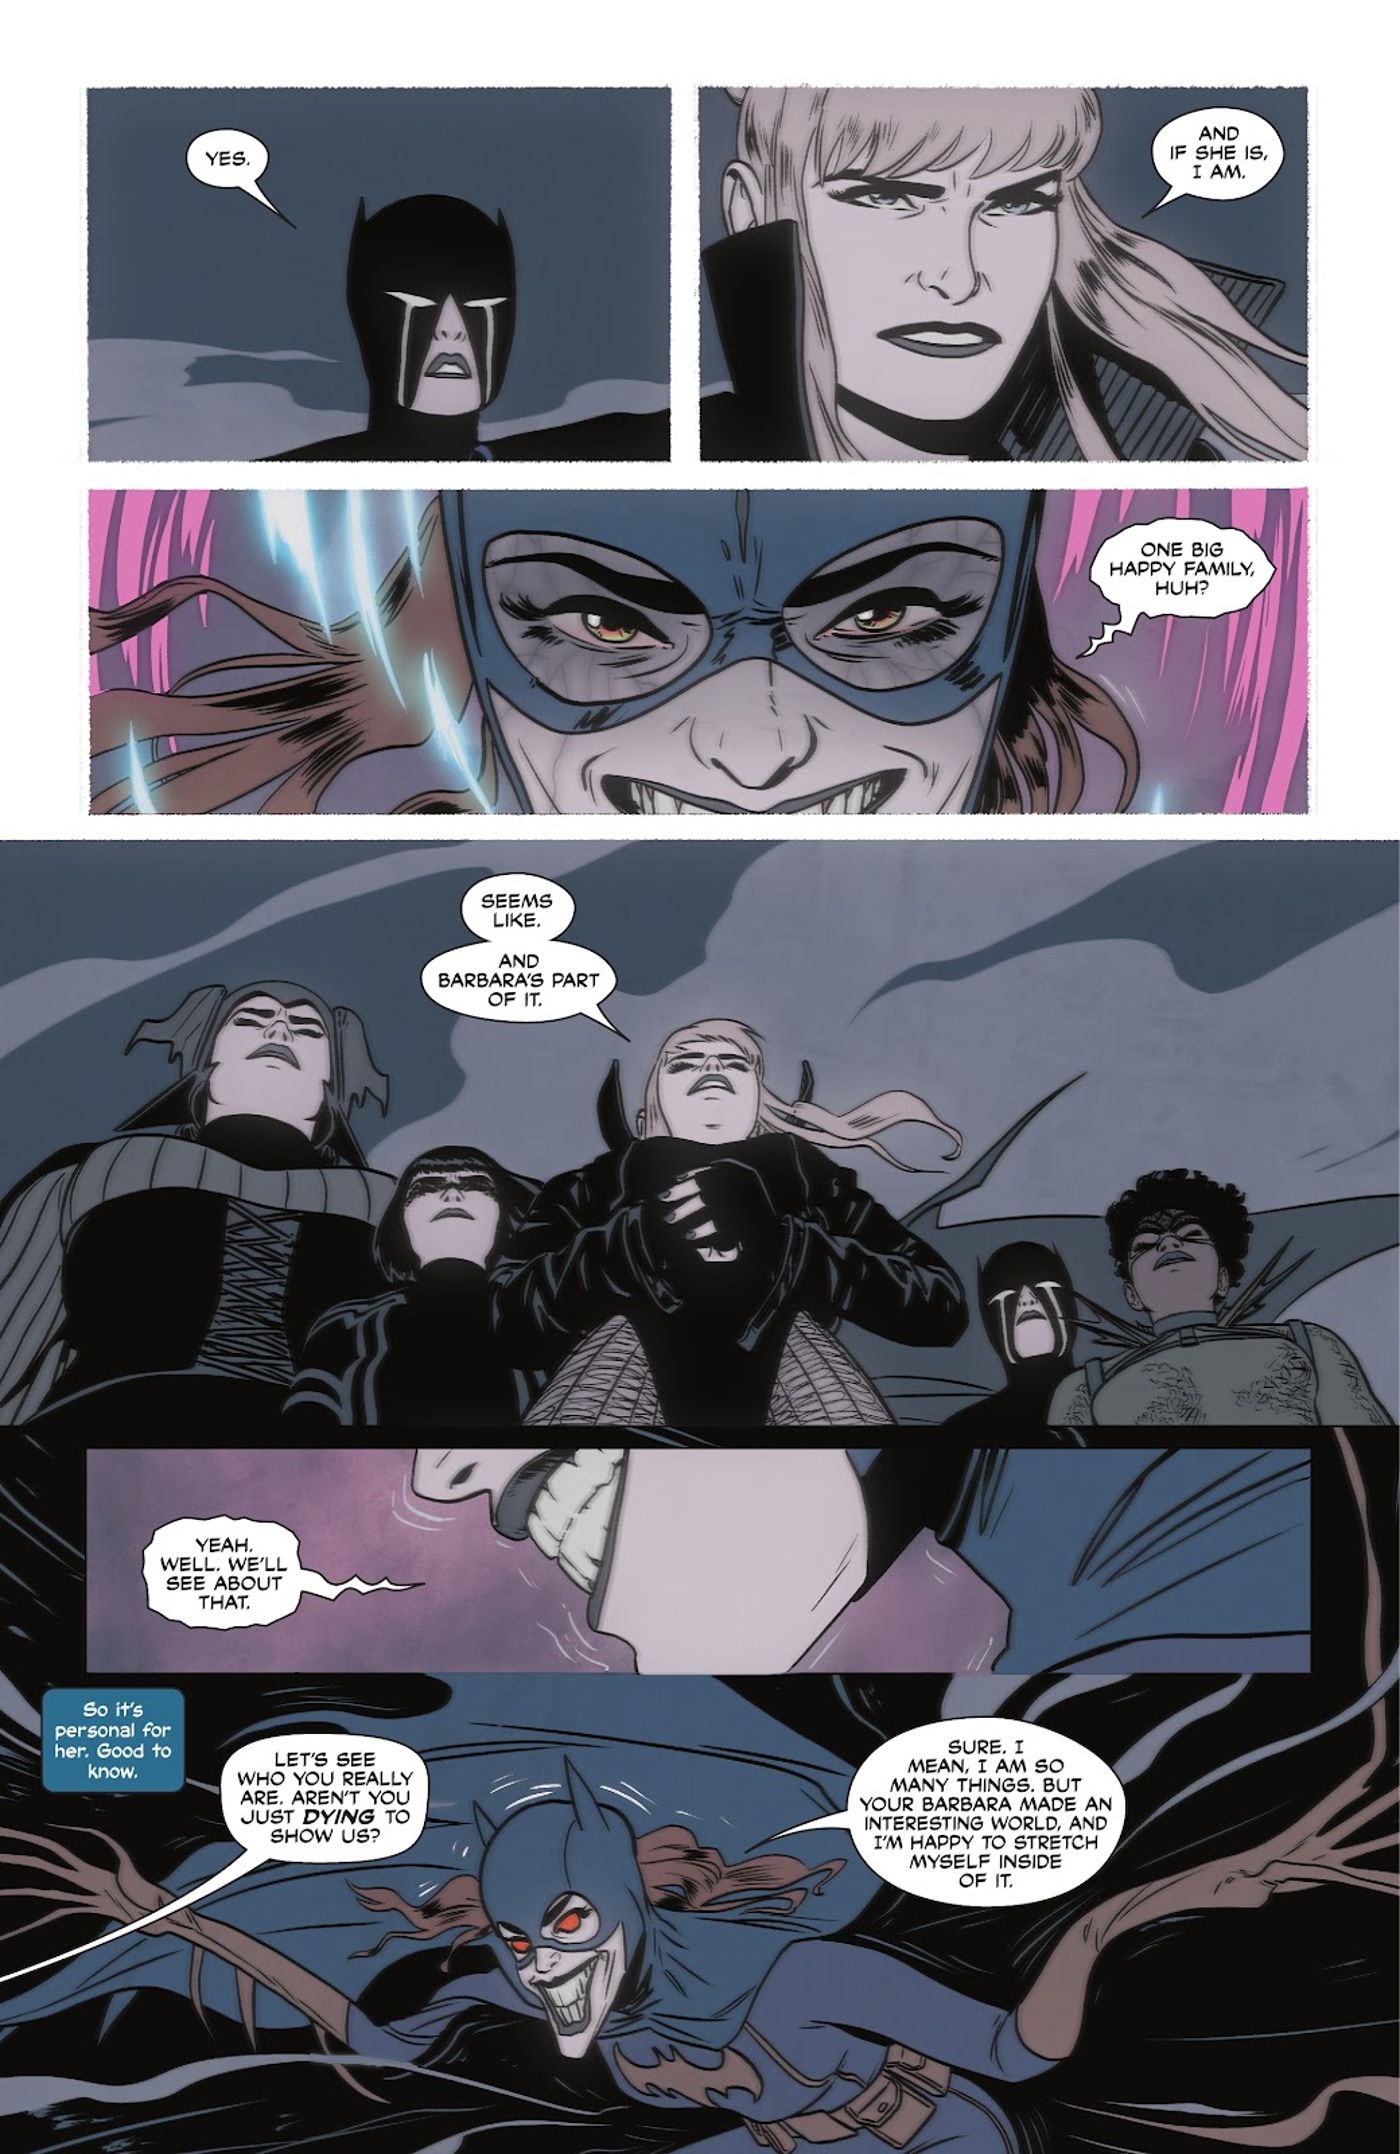 Black Canary says she trusts Batgirl as Barbara Gordon turns into a demonic looking figure. 